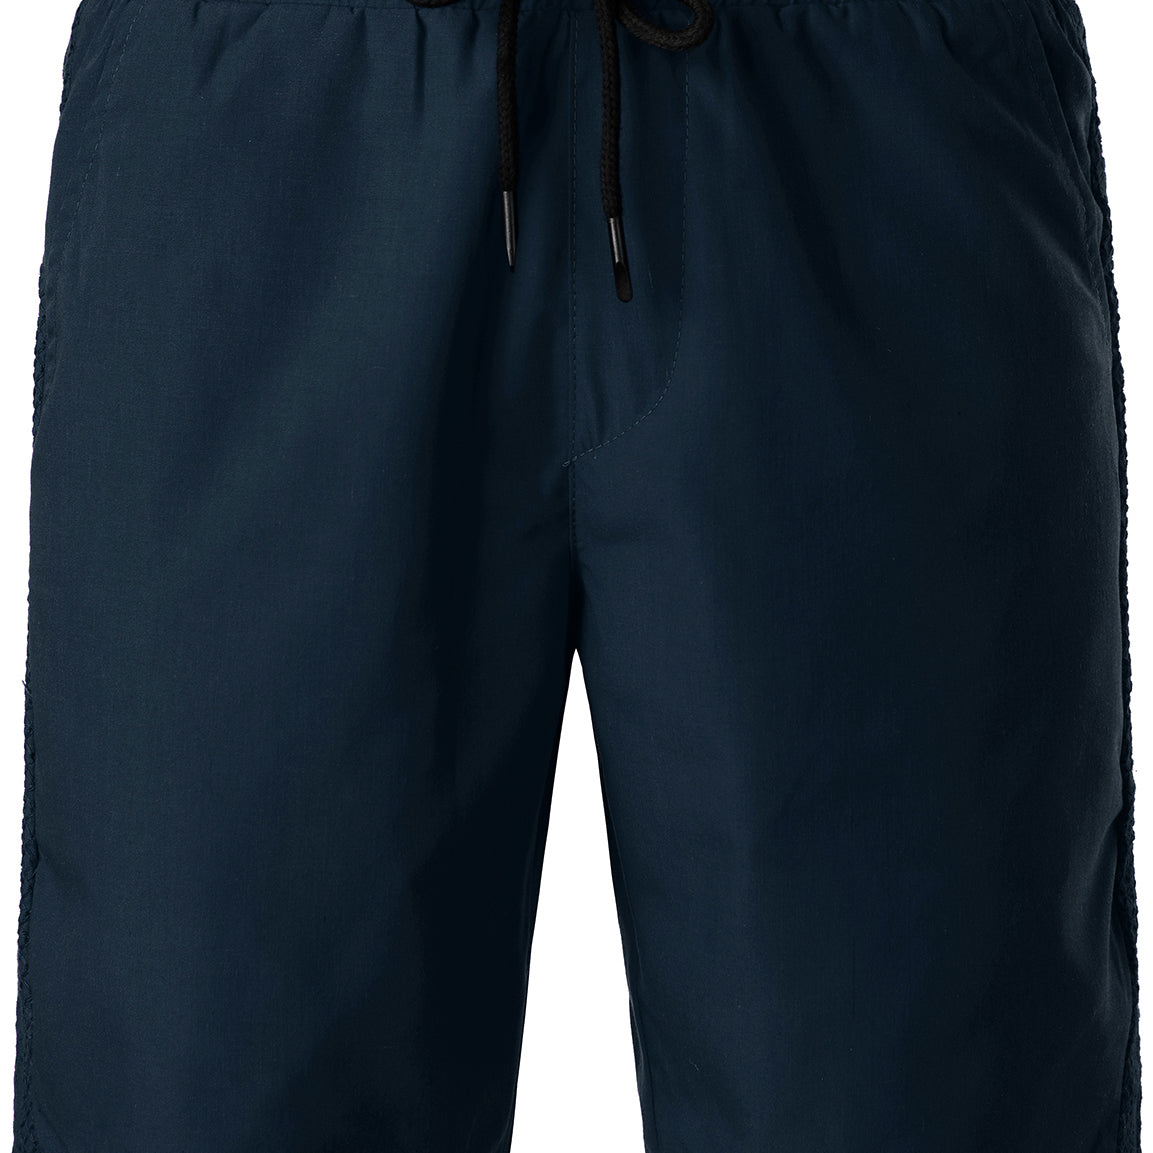 Men's Plus Size Hawaiian Casual Cotton Shorts